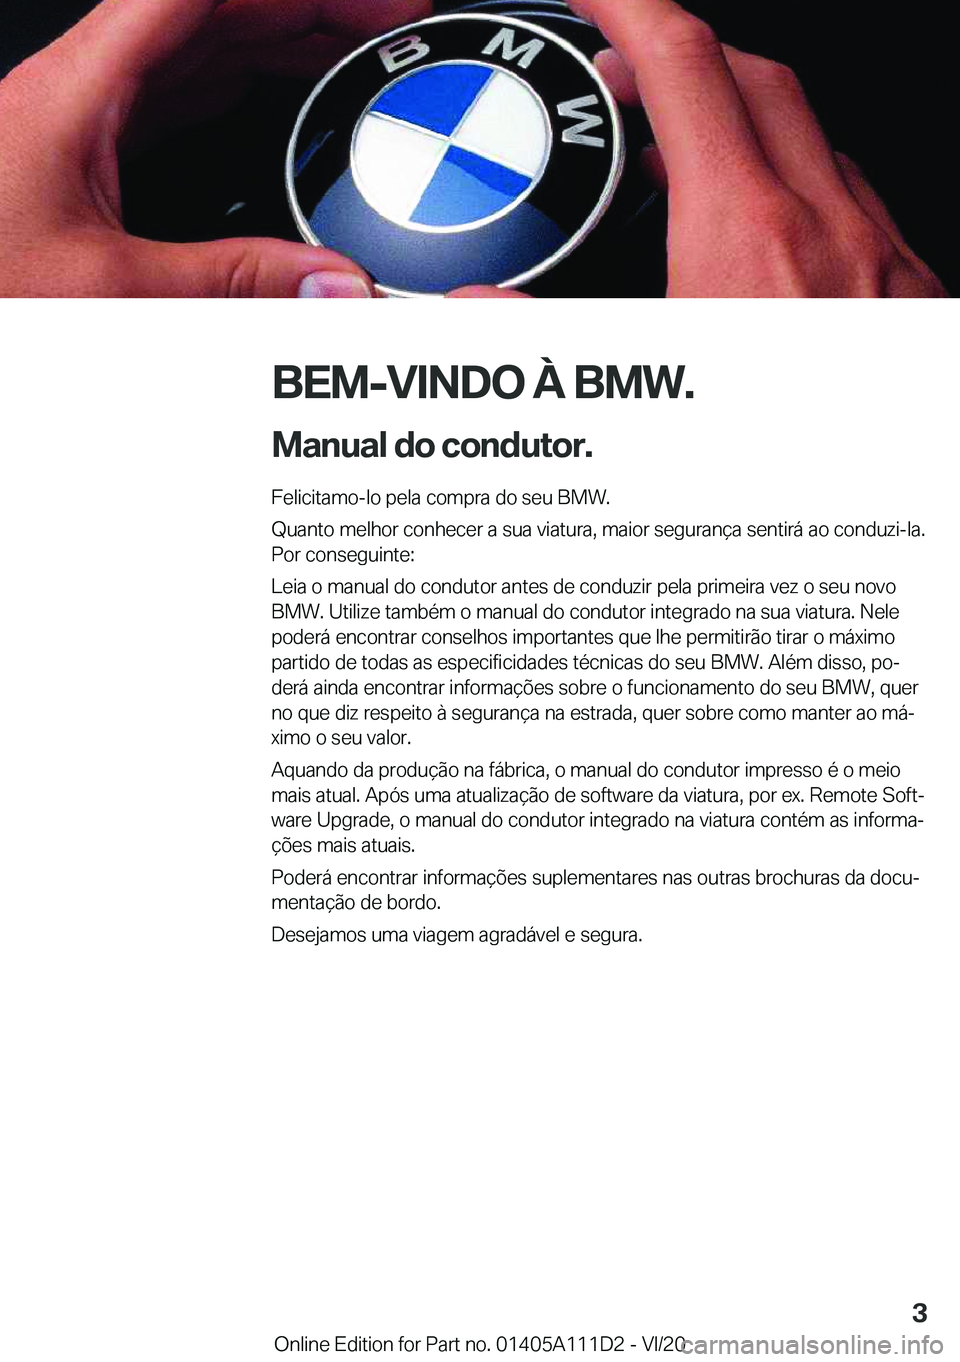 BMW 3 SERIES SEDAN PLUG-IN HYBRID 2021  Manual do condutor (in Portuguese) �B�E�M�-�V�I�N�D�O��À��B�M�W�.
�M�a�n�u�a�l��d�o��c�o�n�d�u�t�o�r�. �F�e�l�i�c�i�t�a�m�o�-�l�o��p�e�l�a��c�o�m�p�r�a��d�o��s�e�u��B�M�W�.
�Q�u�a�n�t�o��m�e�l�h�o�r��c�o�n�h�e�c�e�r��a��s